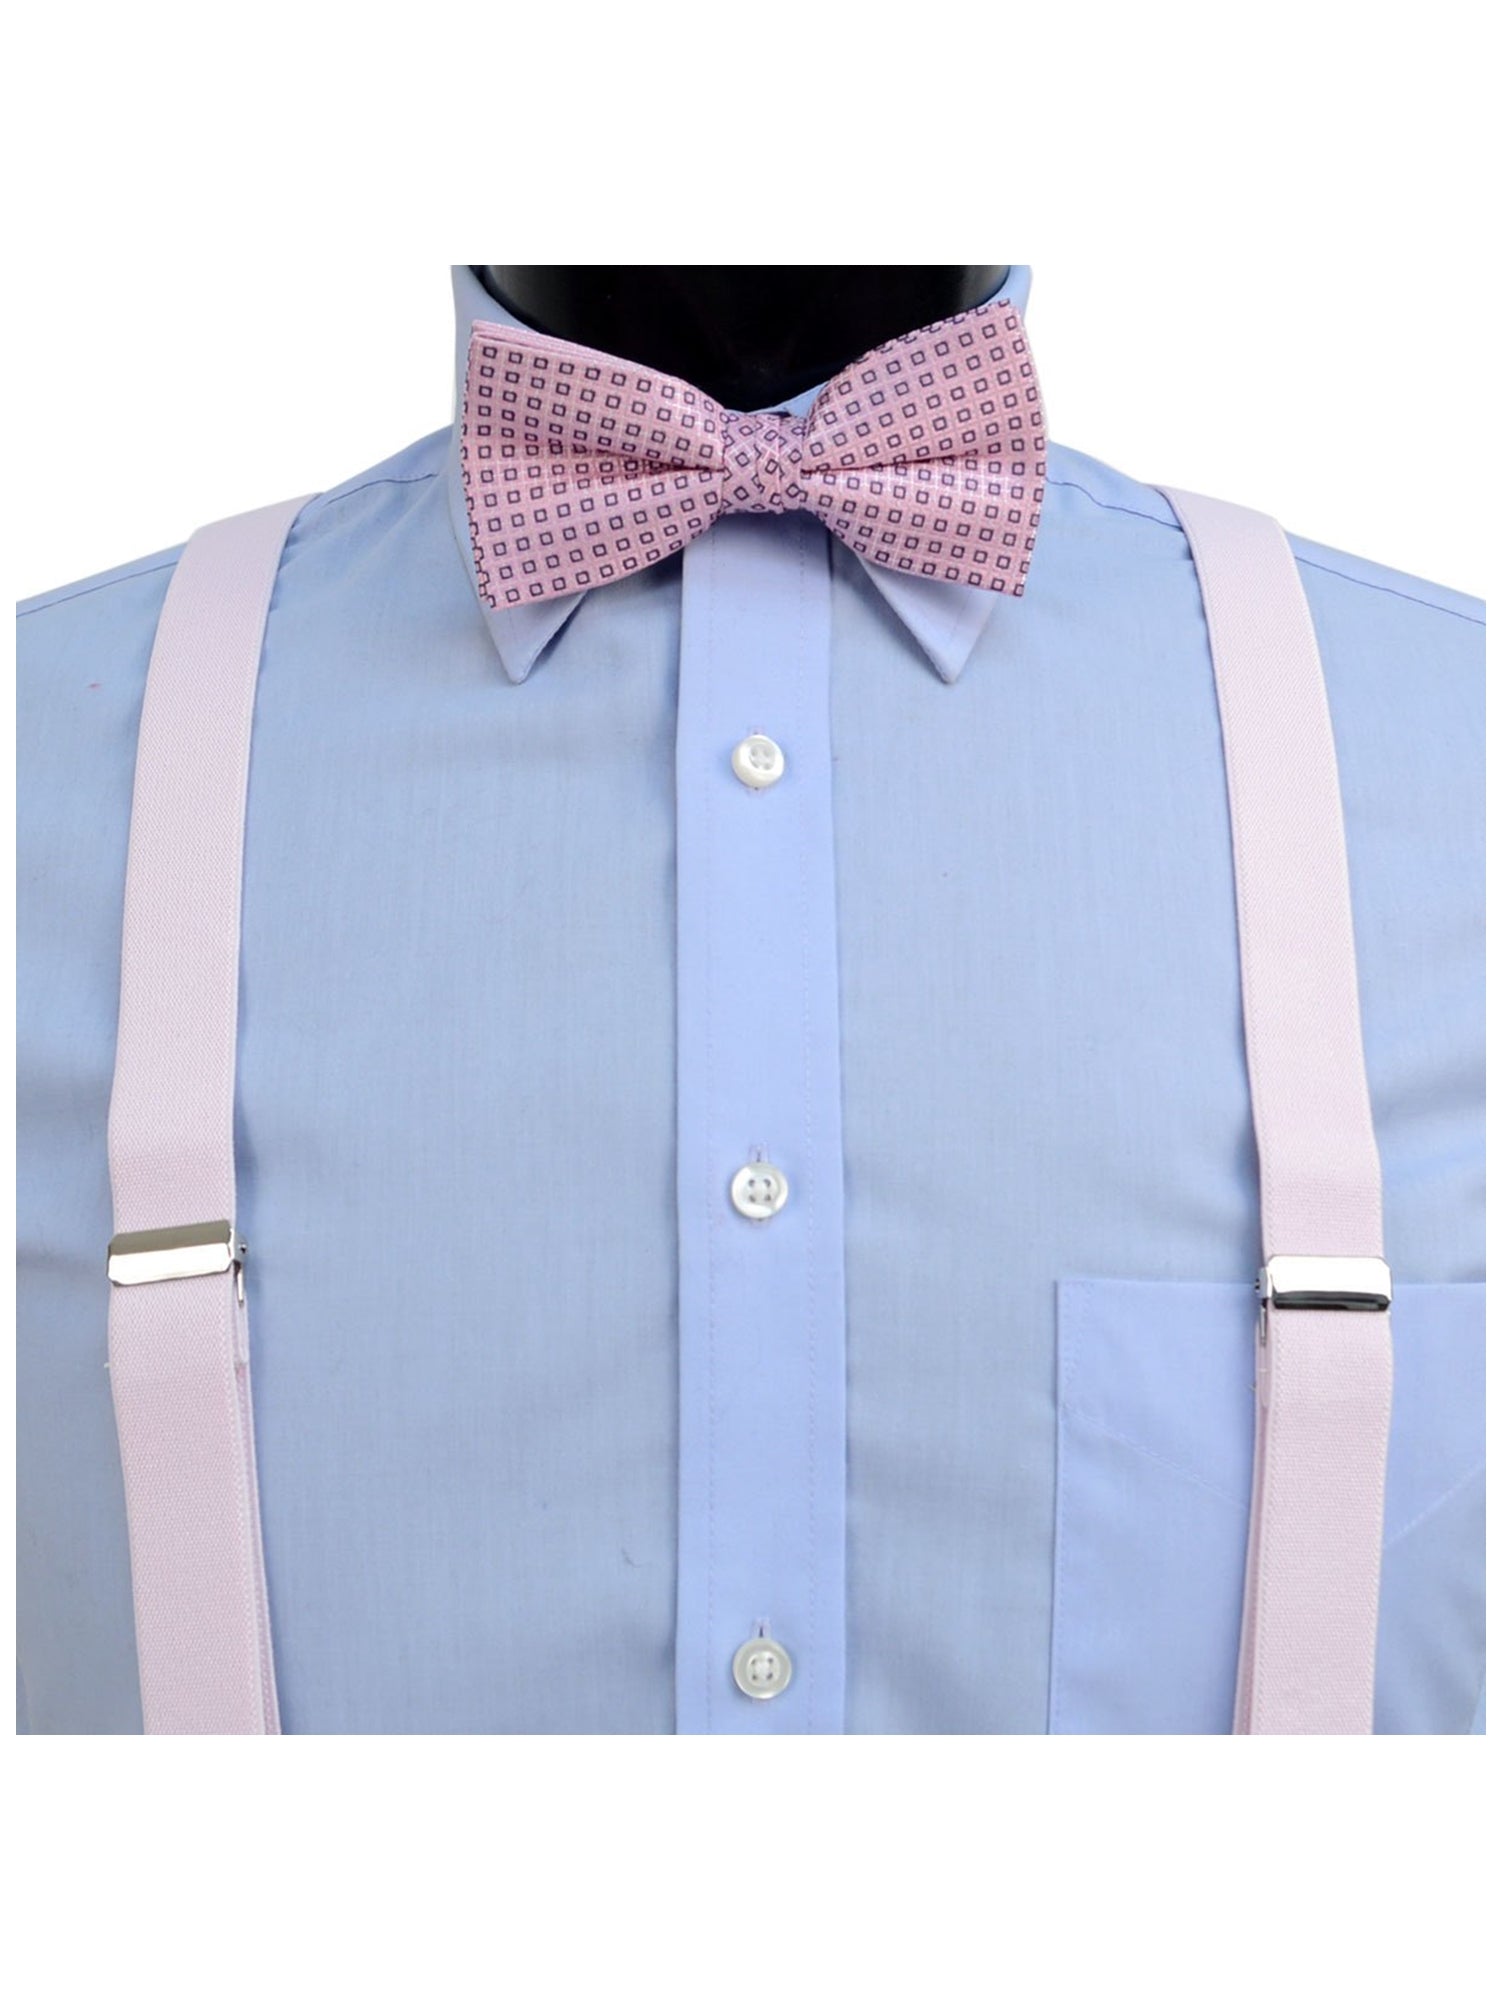 Men's Fuchsia 3 PC Clip-on Suspenders, Bow Tie & Hanky Sets Men's Solid Color Bow Tie TheDapperTie   